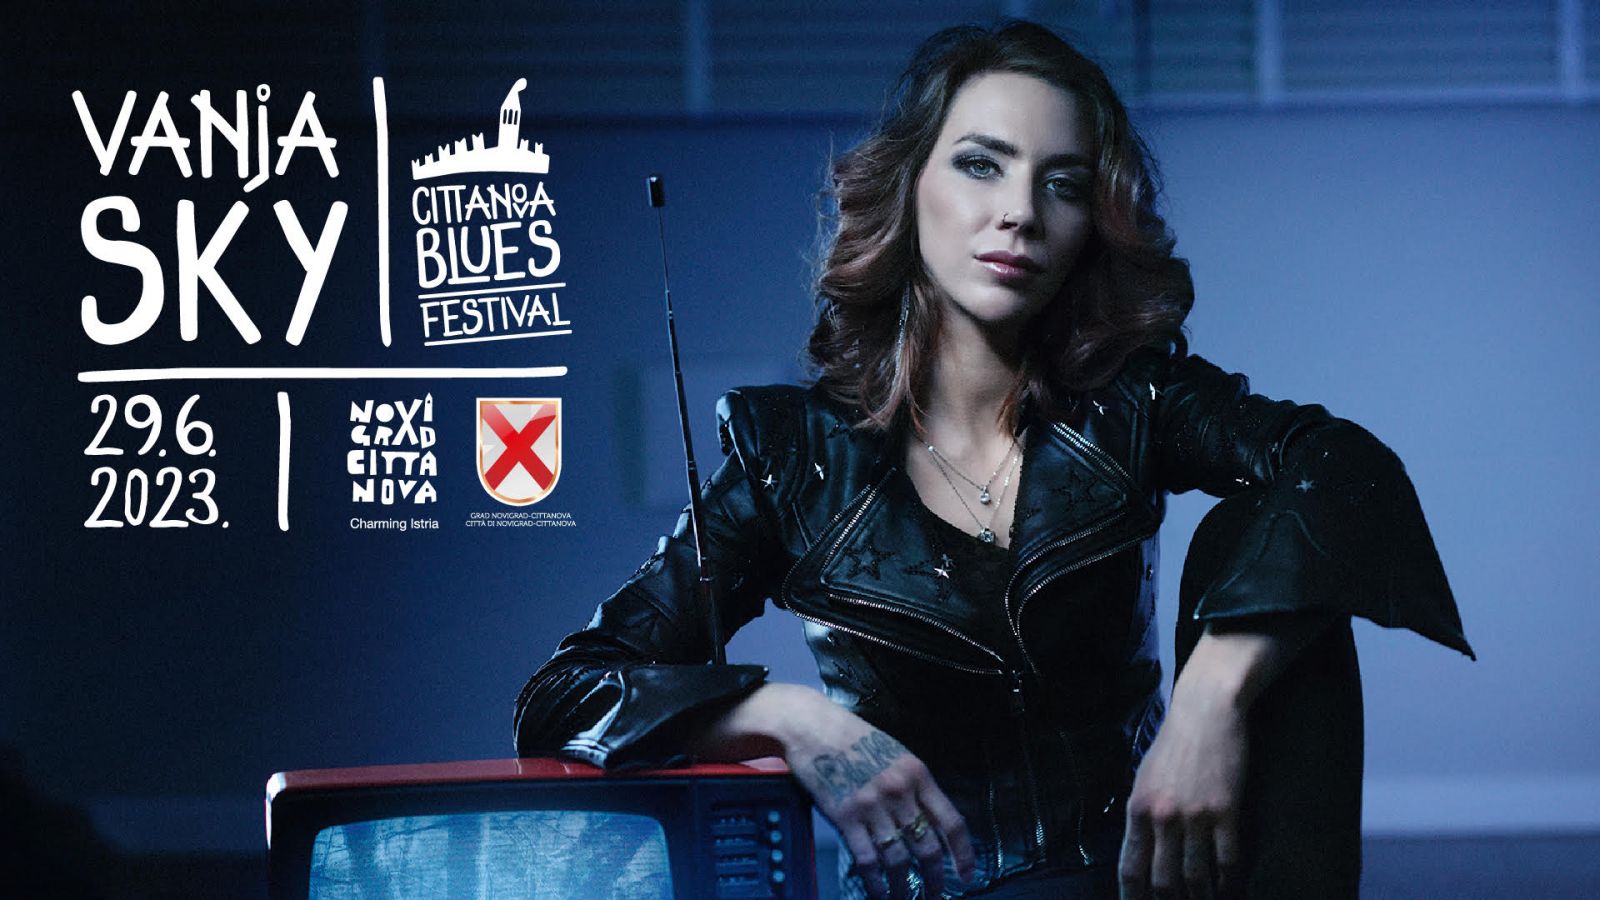 Vanja Sky, hrvatska blues rock gitaristica i pjevačica dolazi na Cittanova Blues Festival 2023.   